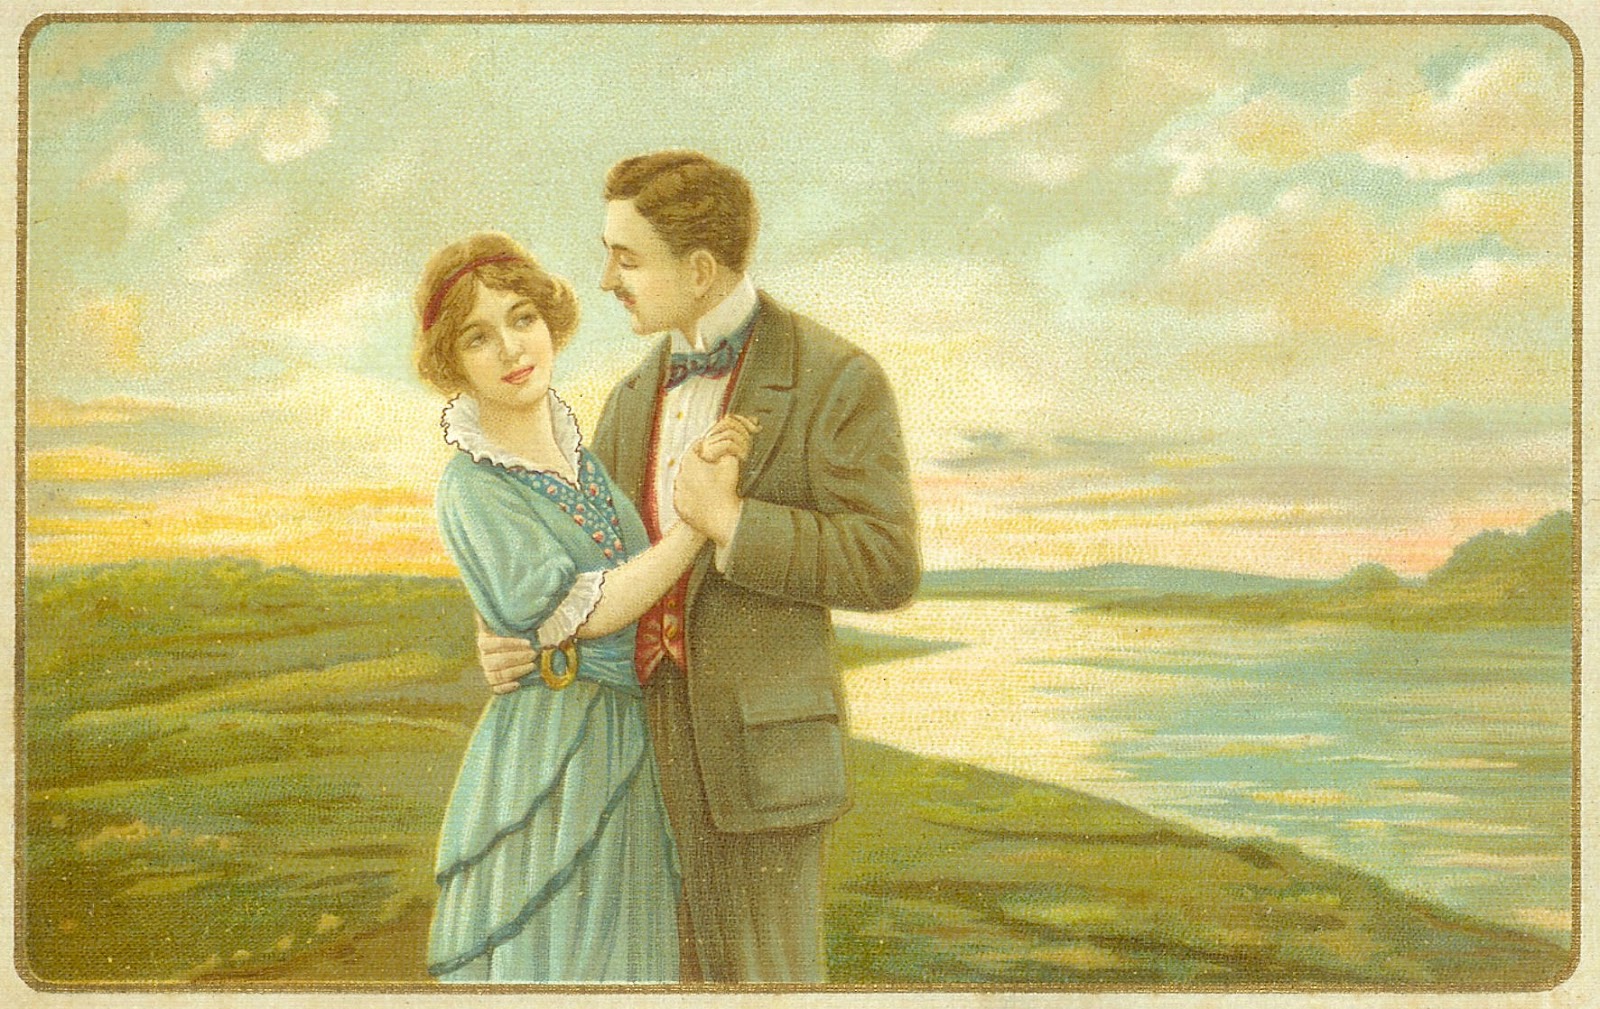 Valentine S Day Clip Art Antique Images Of Graphics Romance Wallpaper